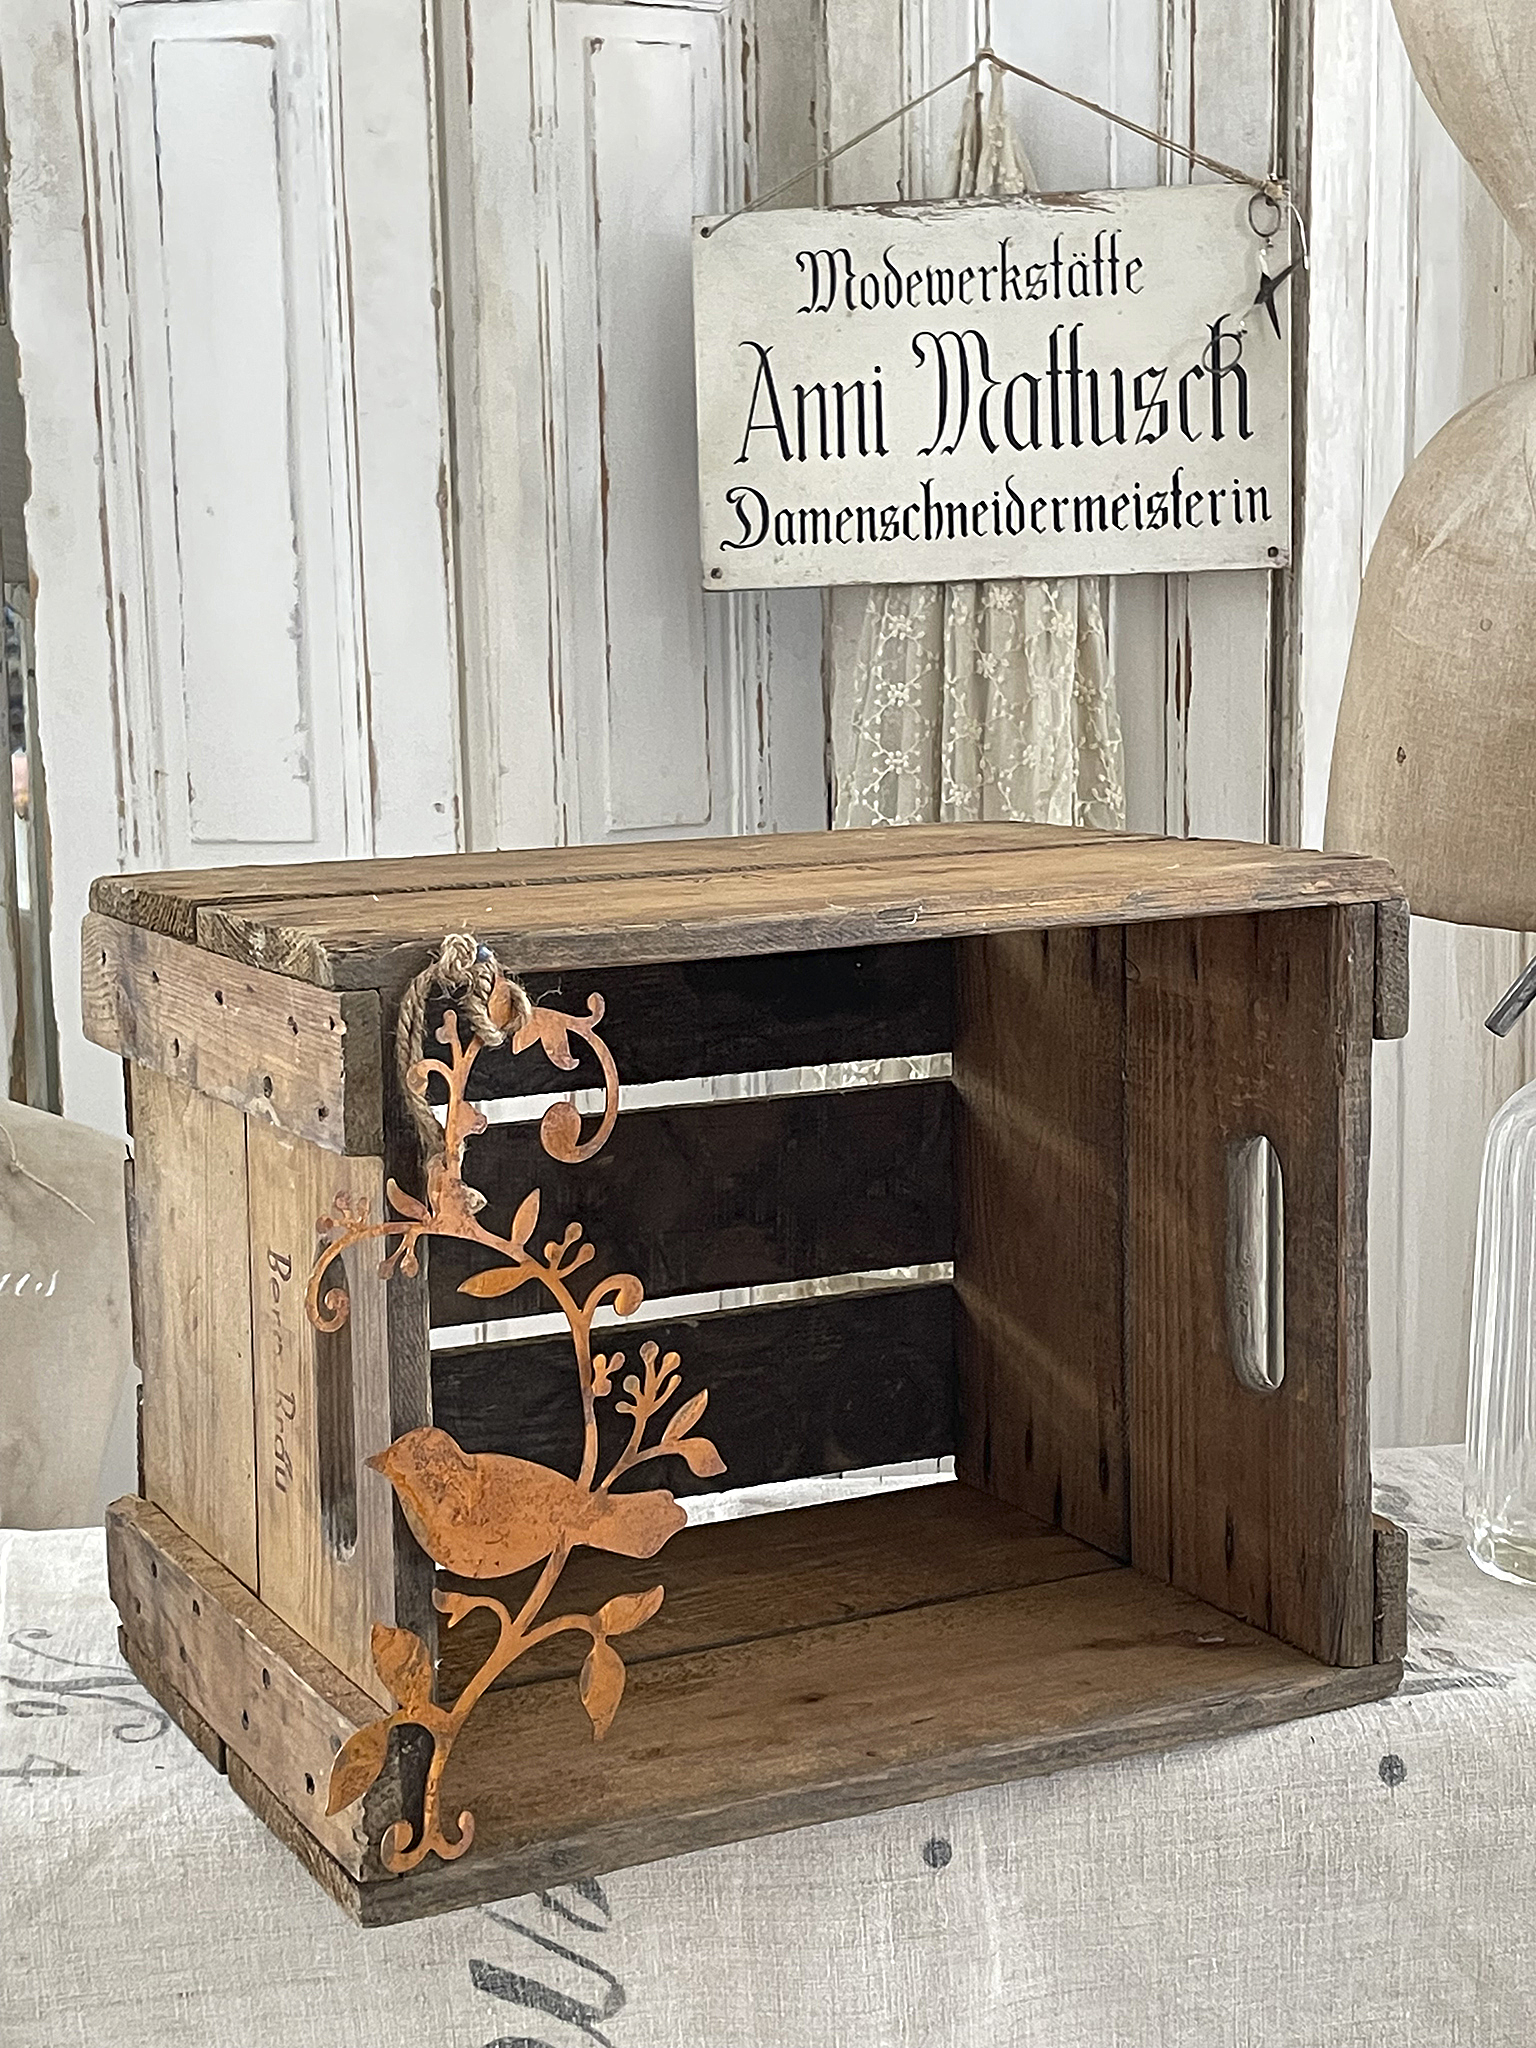 Alte Naturholz-Kiste***